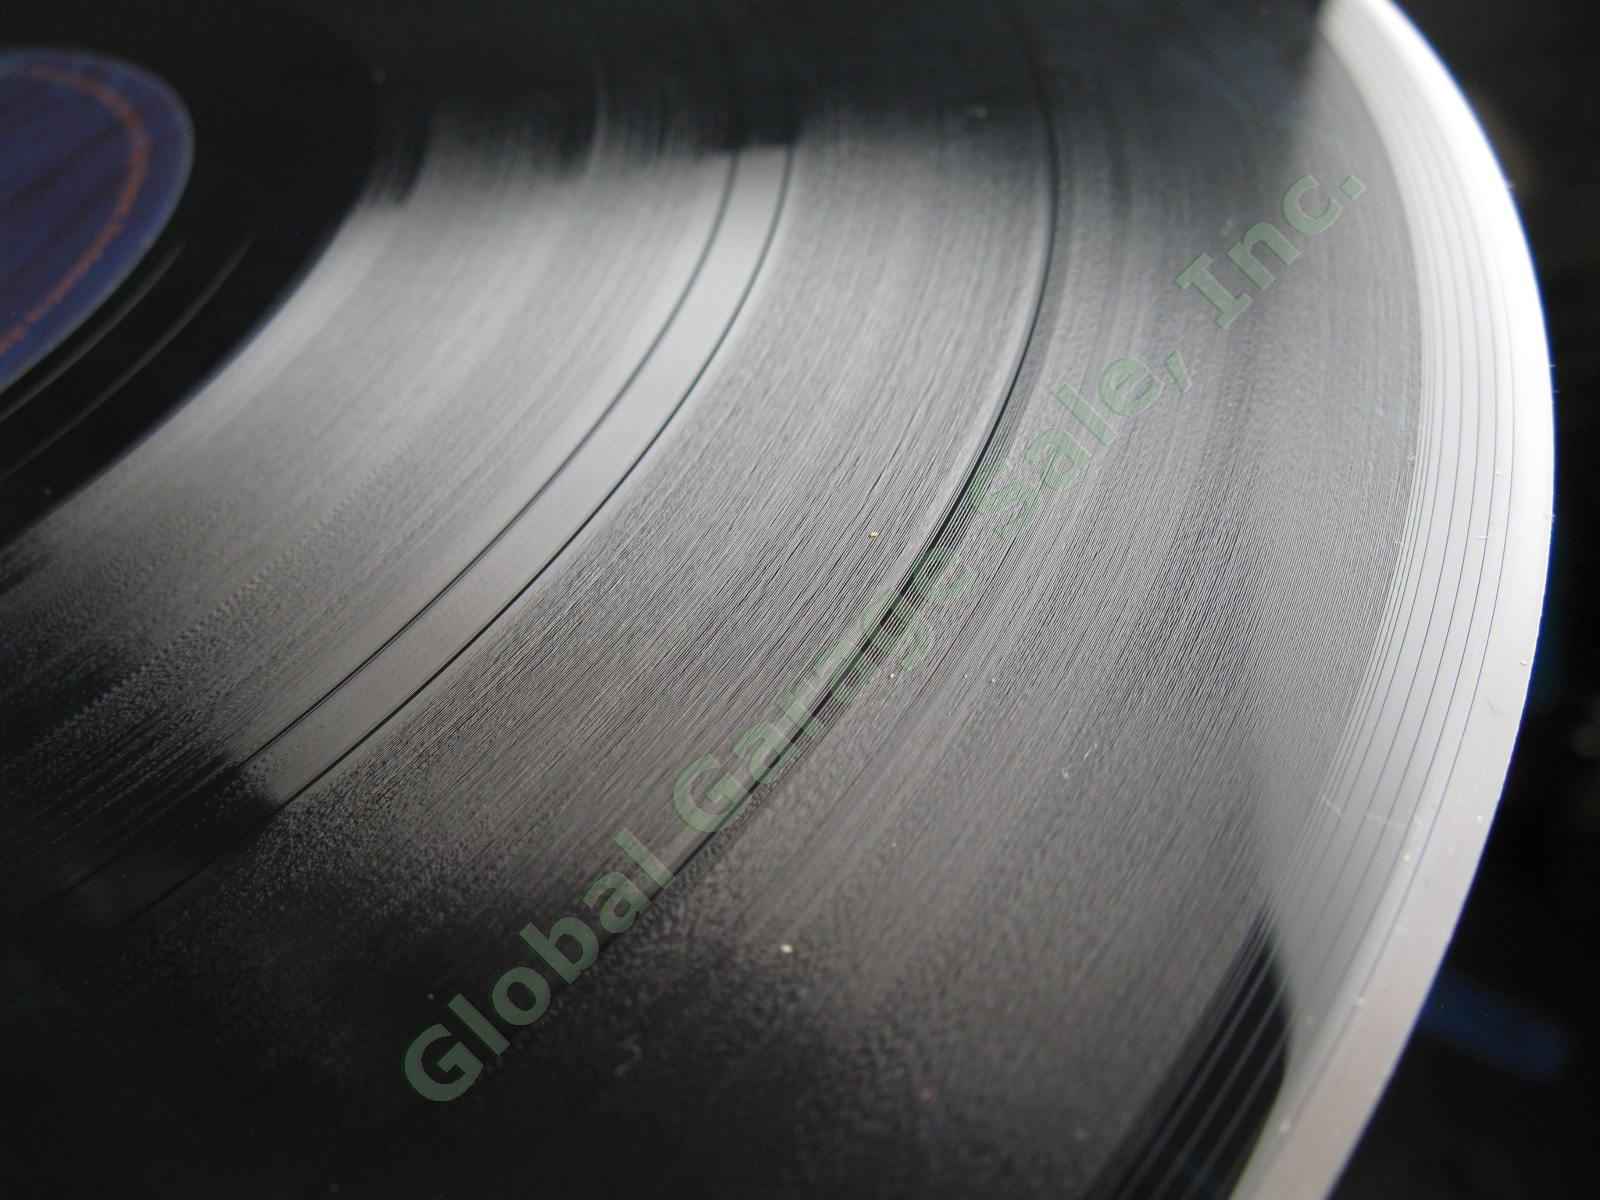 2015 PHISH Limited Edition Rift LP Record Album #8174 Welker Print Jemp1085 NR 8